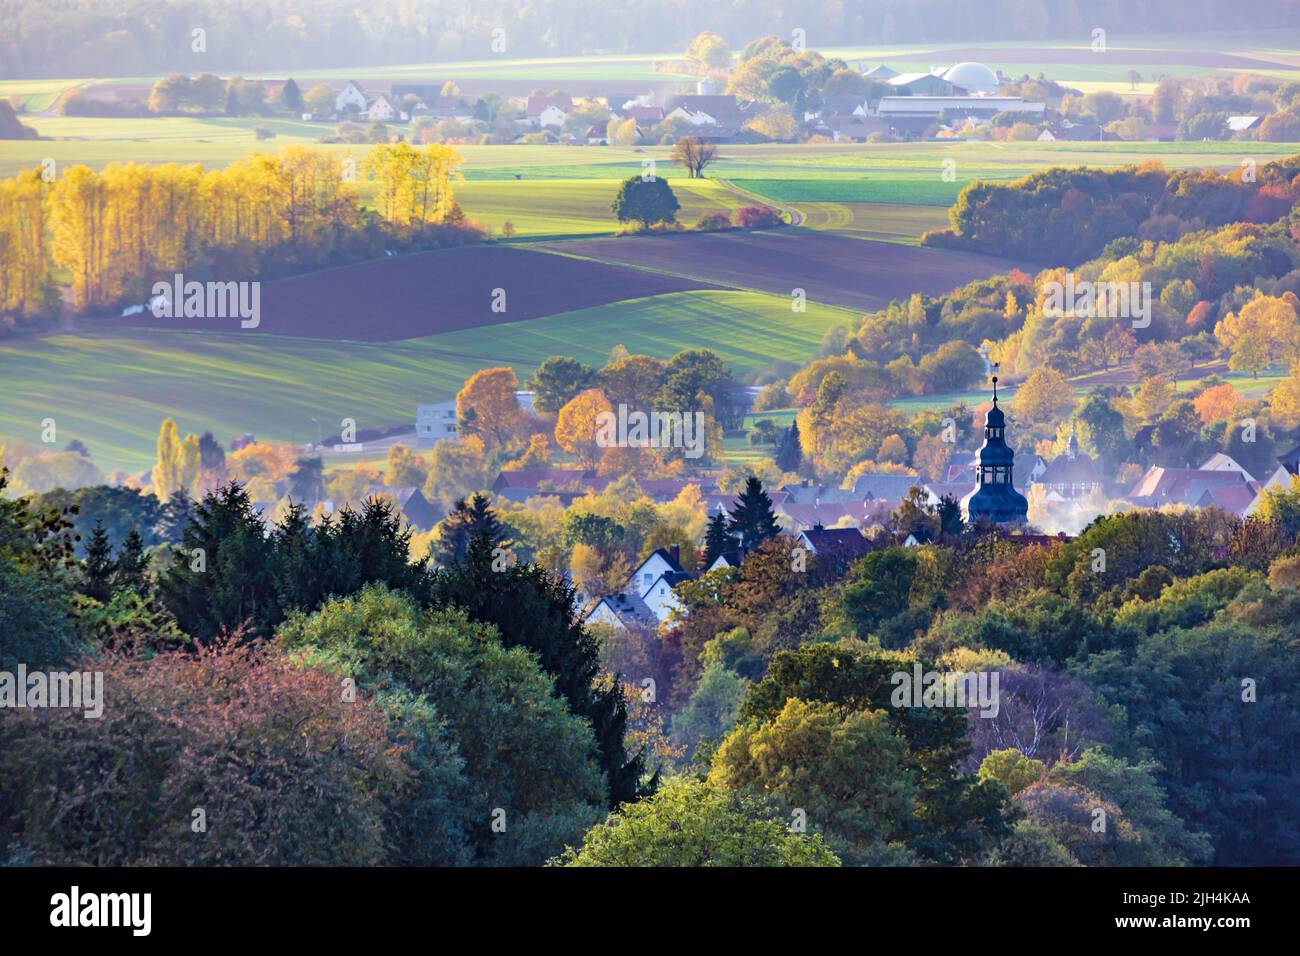 Otoño paisaje rural cerca de Coburg, Alemania Foto de stock